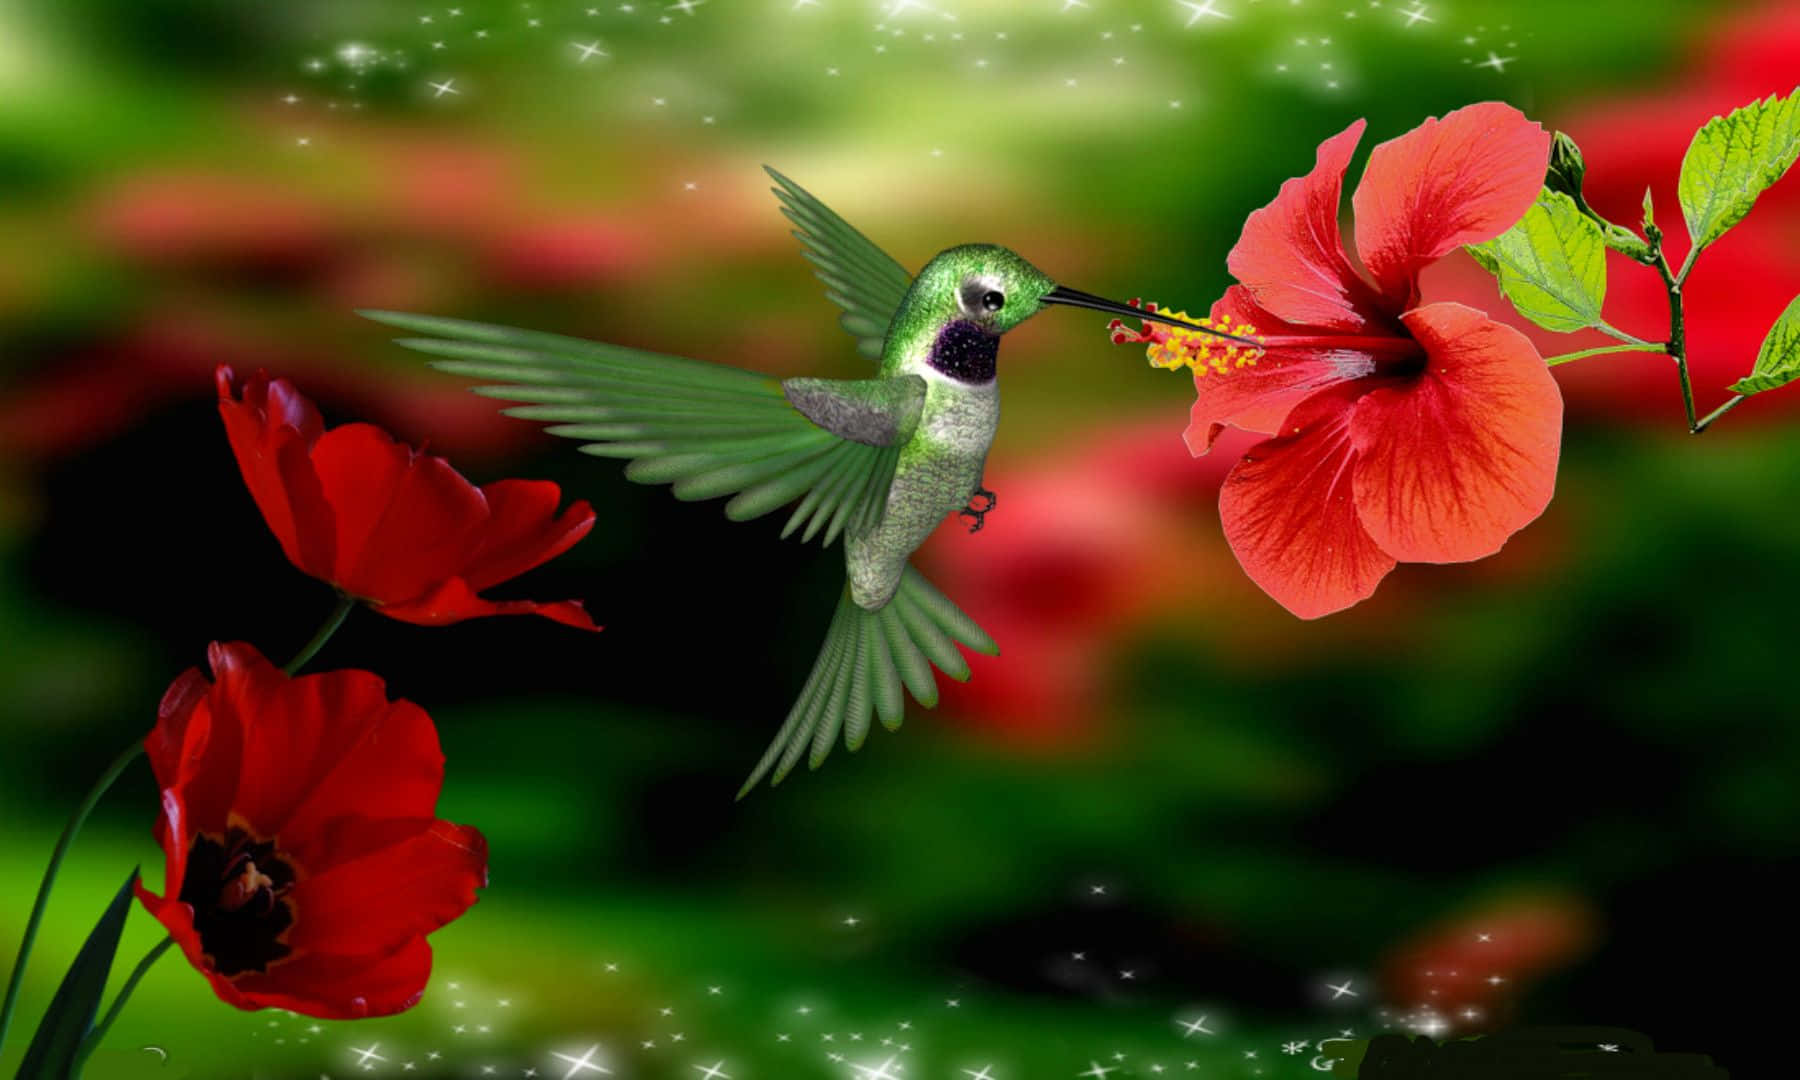 "Hummingbird Resting in a Garden"